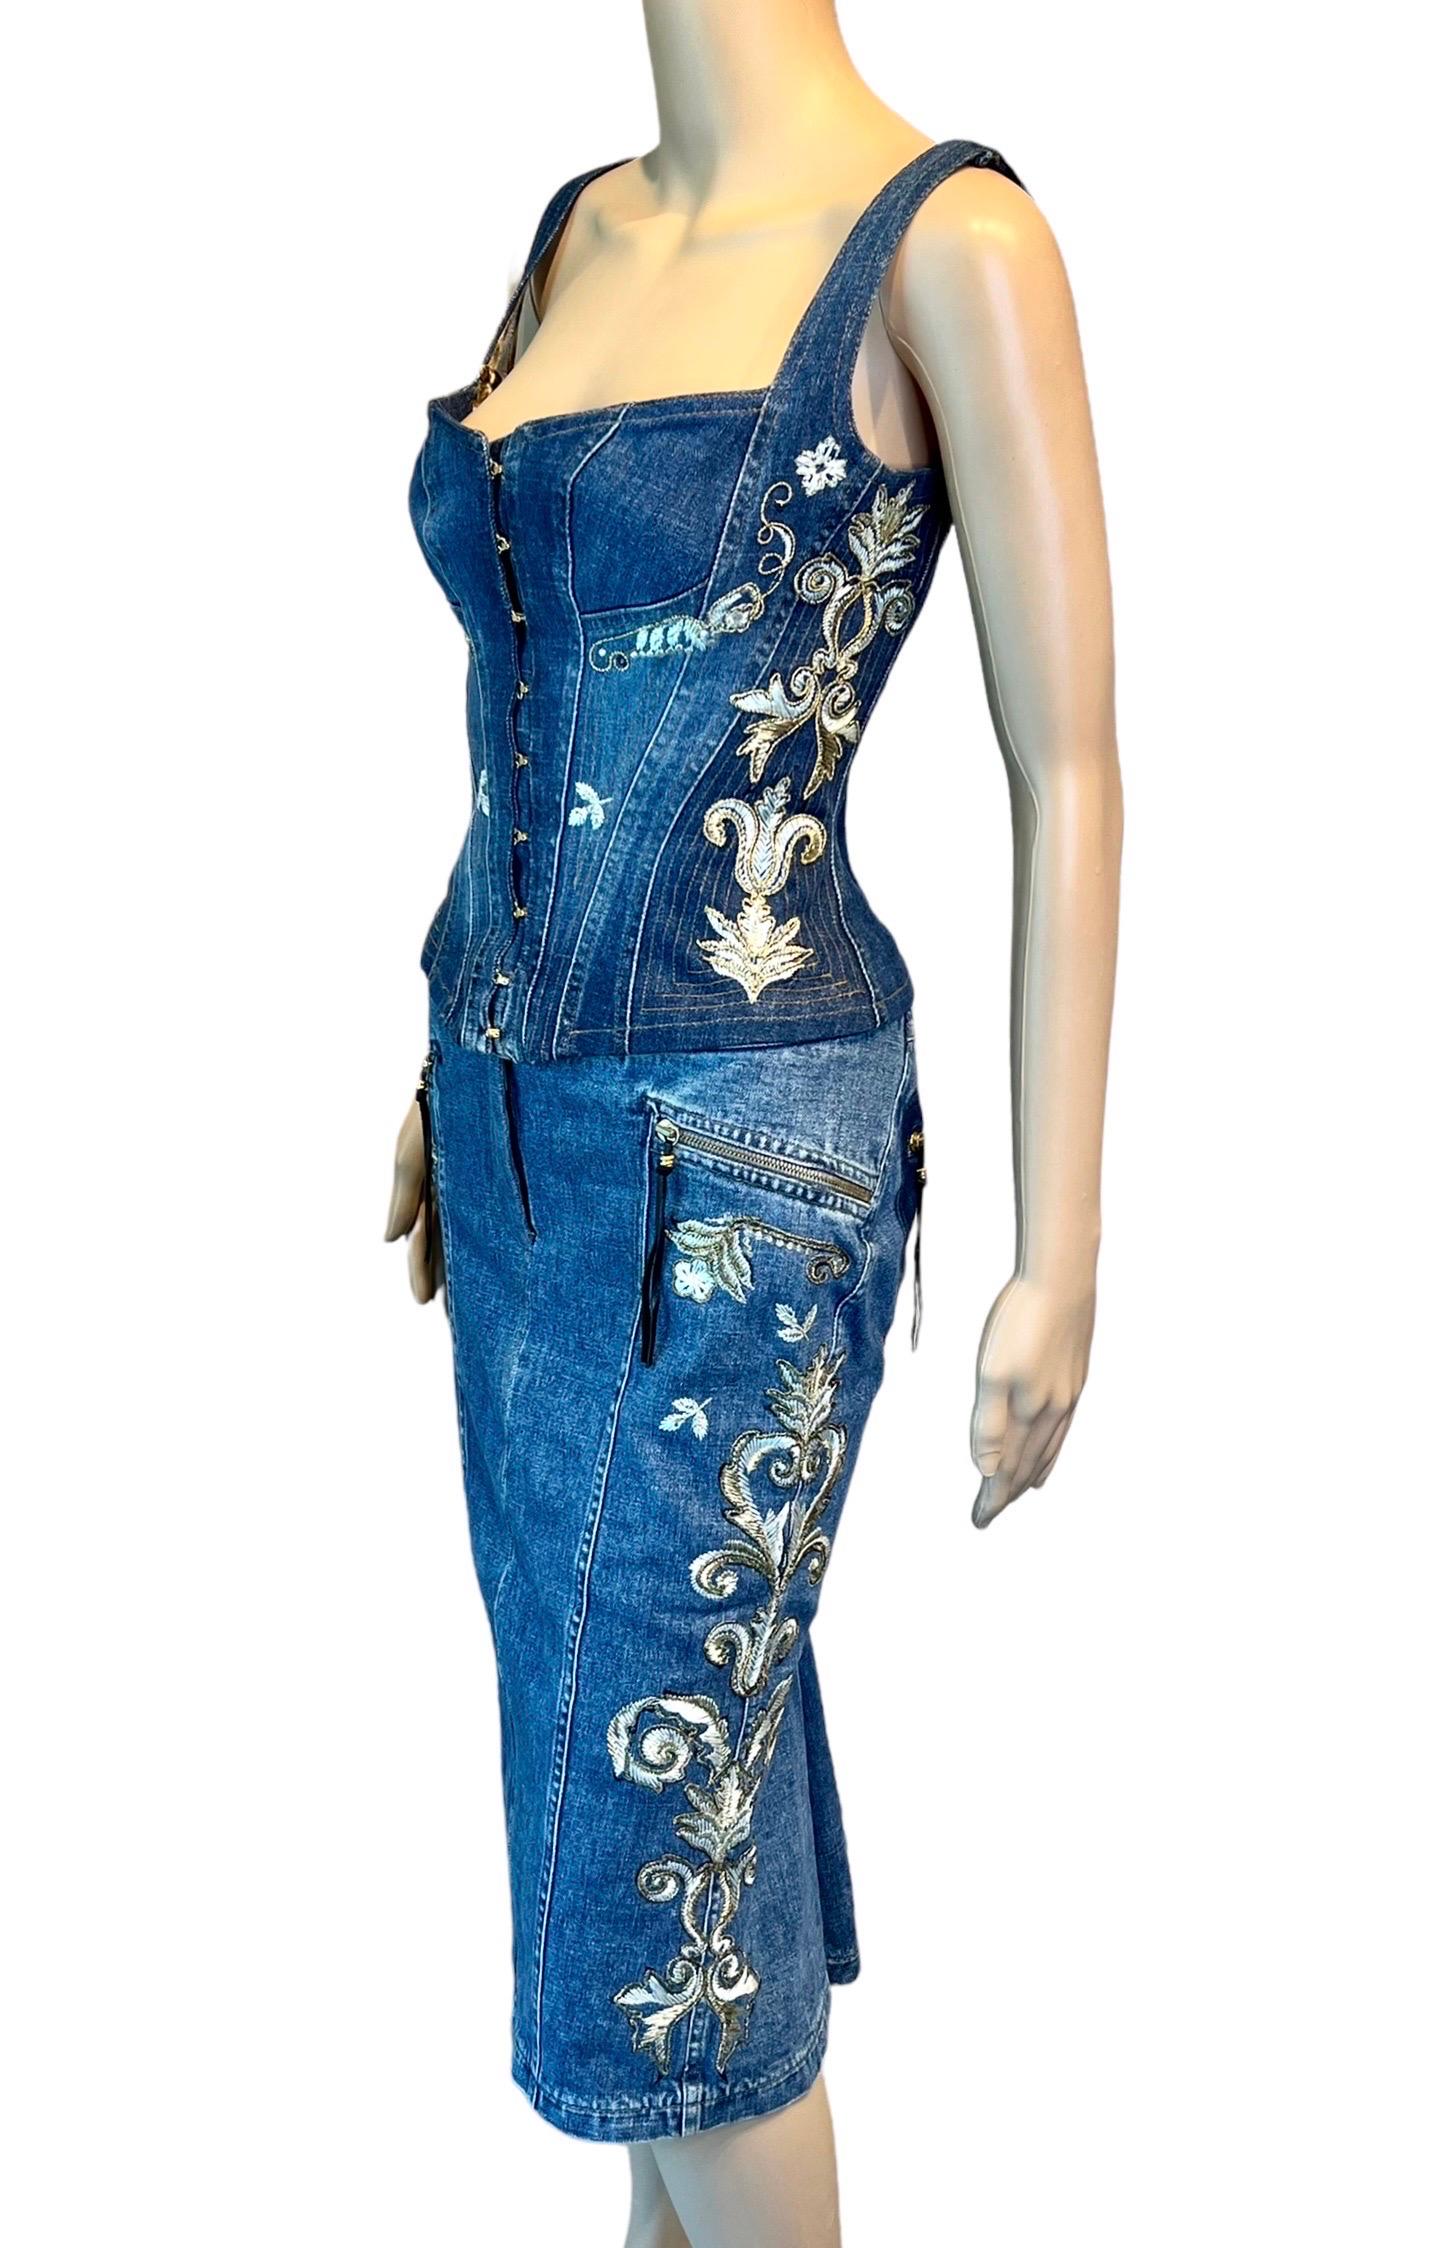 Blue Roberto Cavalli S/S 2003 Embroidered Corset Bustier Denim Top &Skirt 2 Piece Set